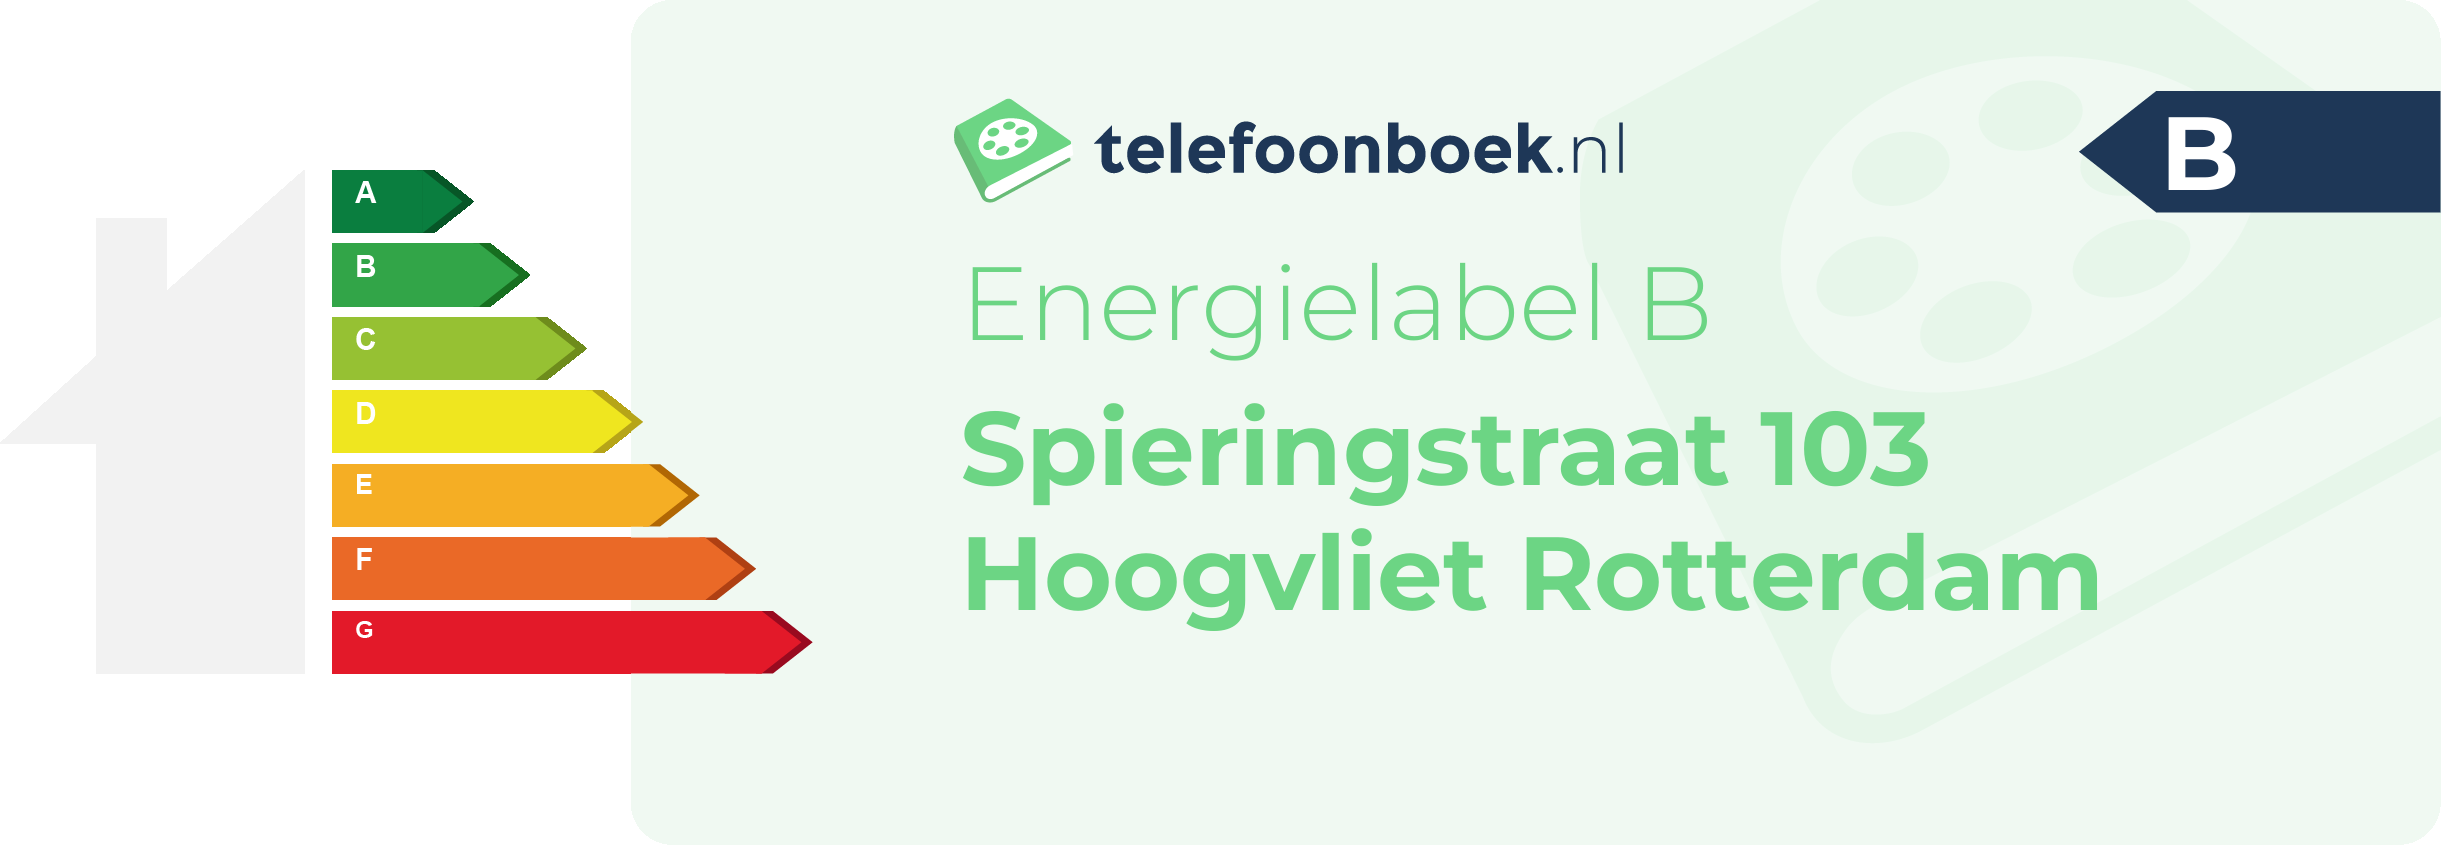 Energielabel Spieringstraat 103 Hoogvliet Rotterdam